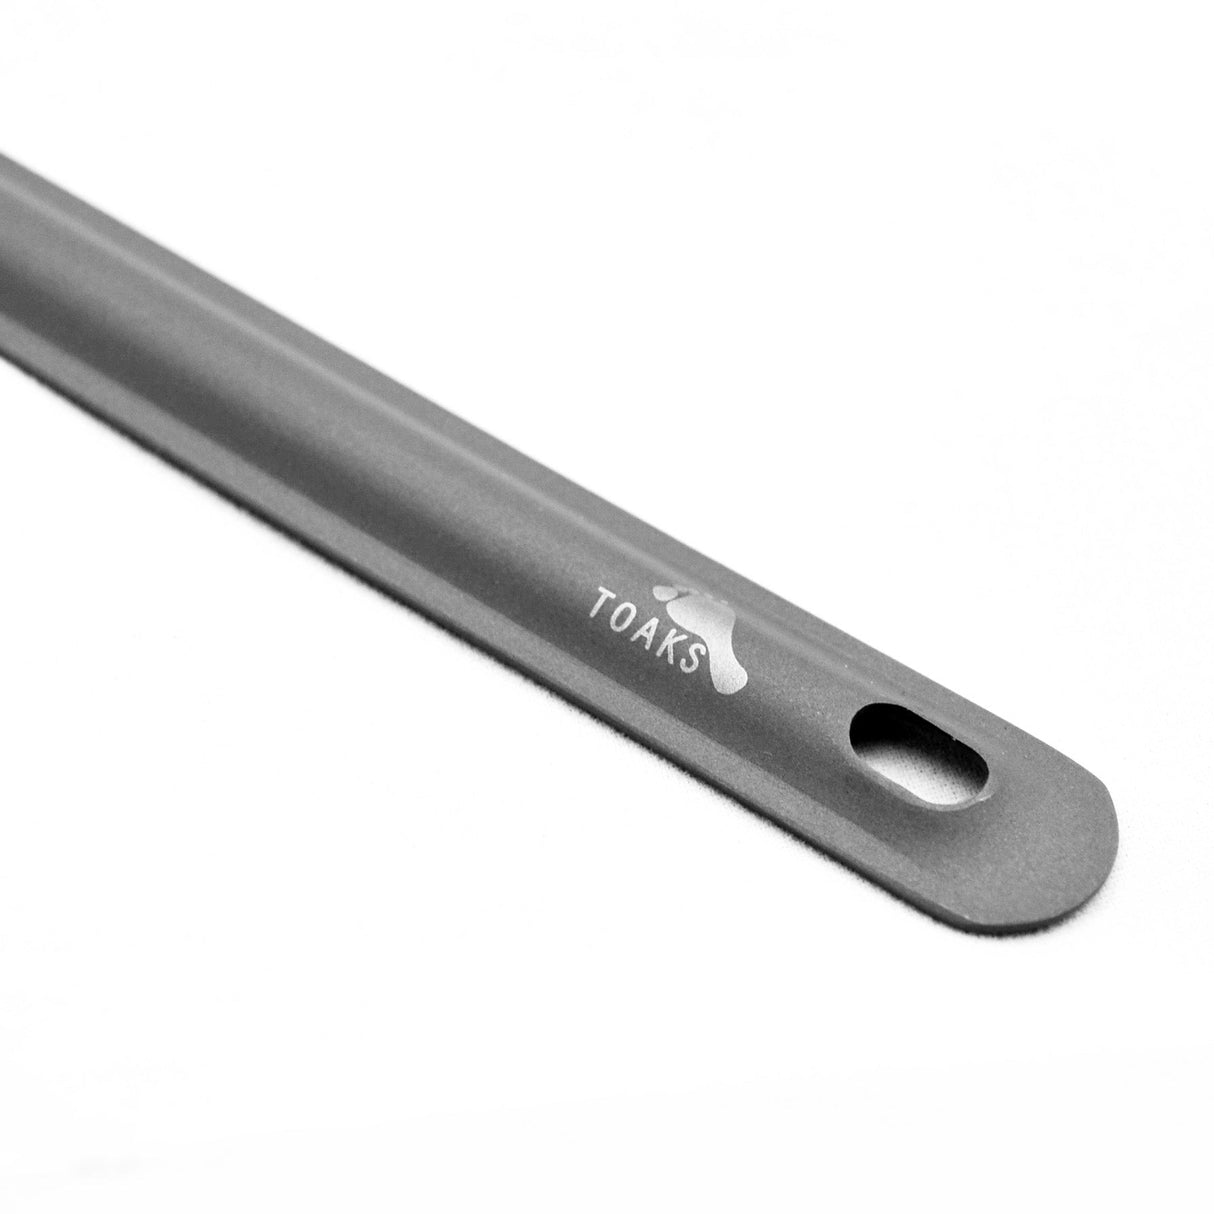 Titanium Long Handle Spoon - Polished